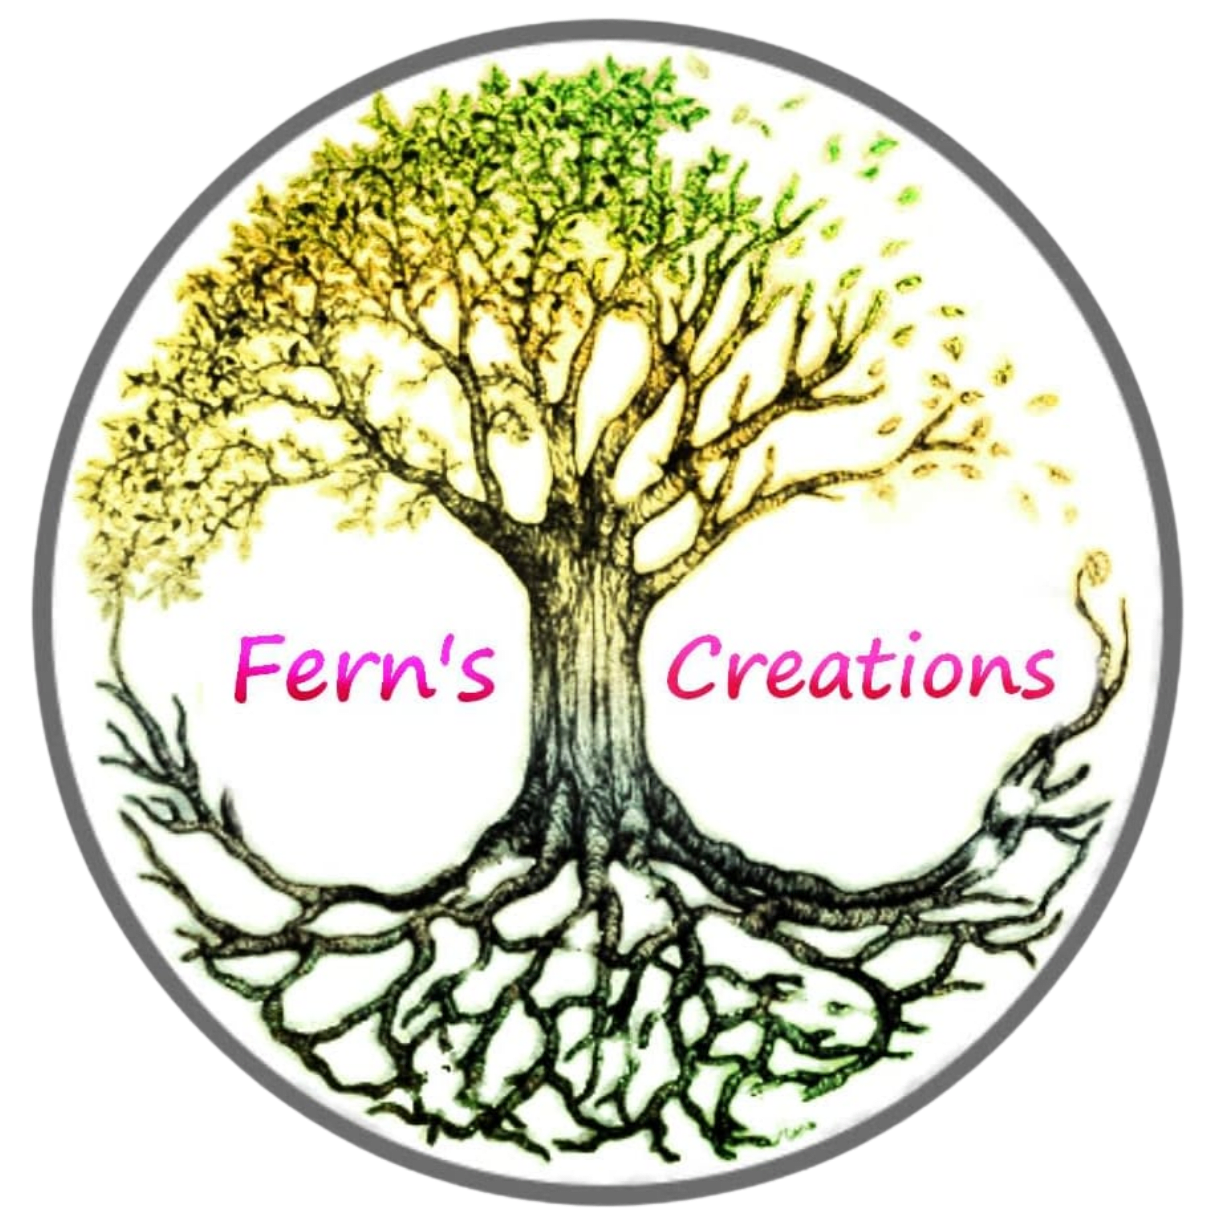 Fern's Creations